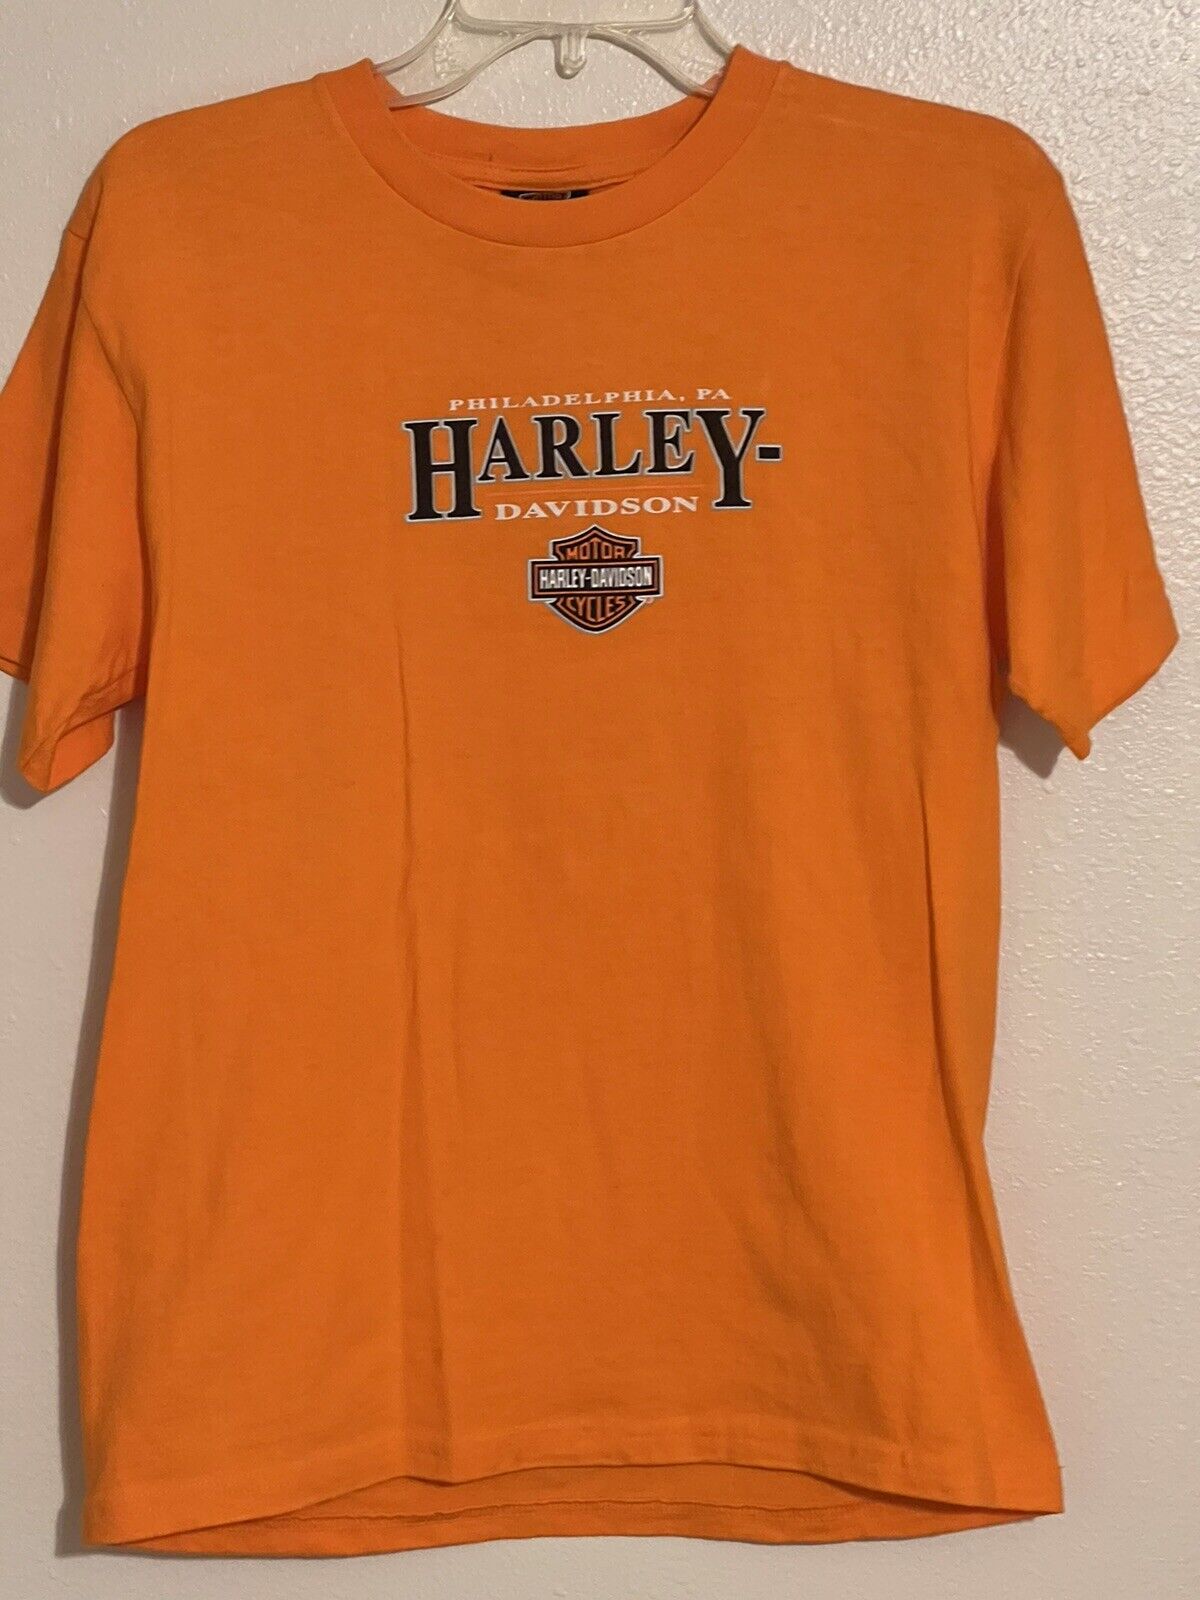 Harley Davidson, Tshirt, Orange, Women’s, Large, Philly, Pa, Preowned